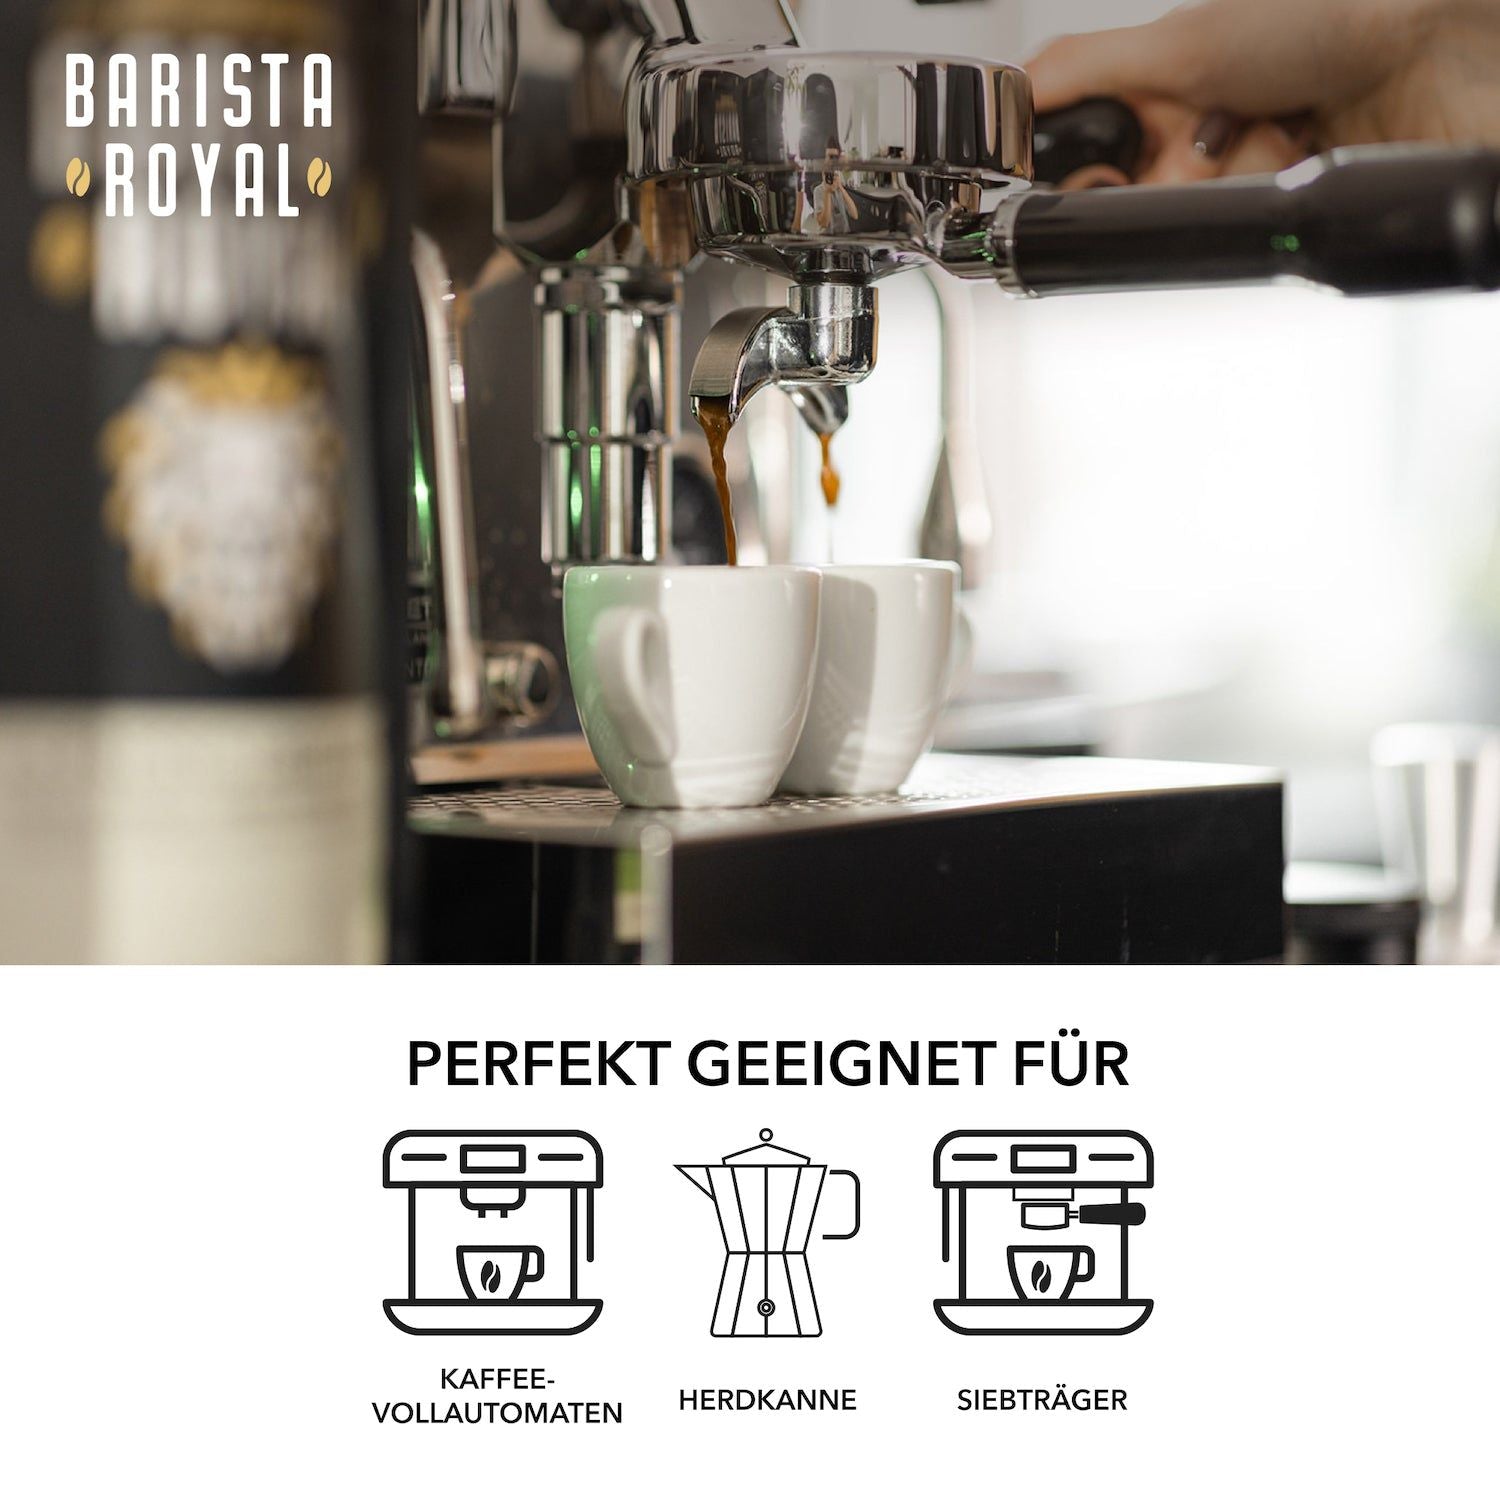  - Amore E Basta (Espresso) - Amore E Basta (Espresso) - Barista Royal GmbH